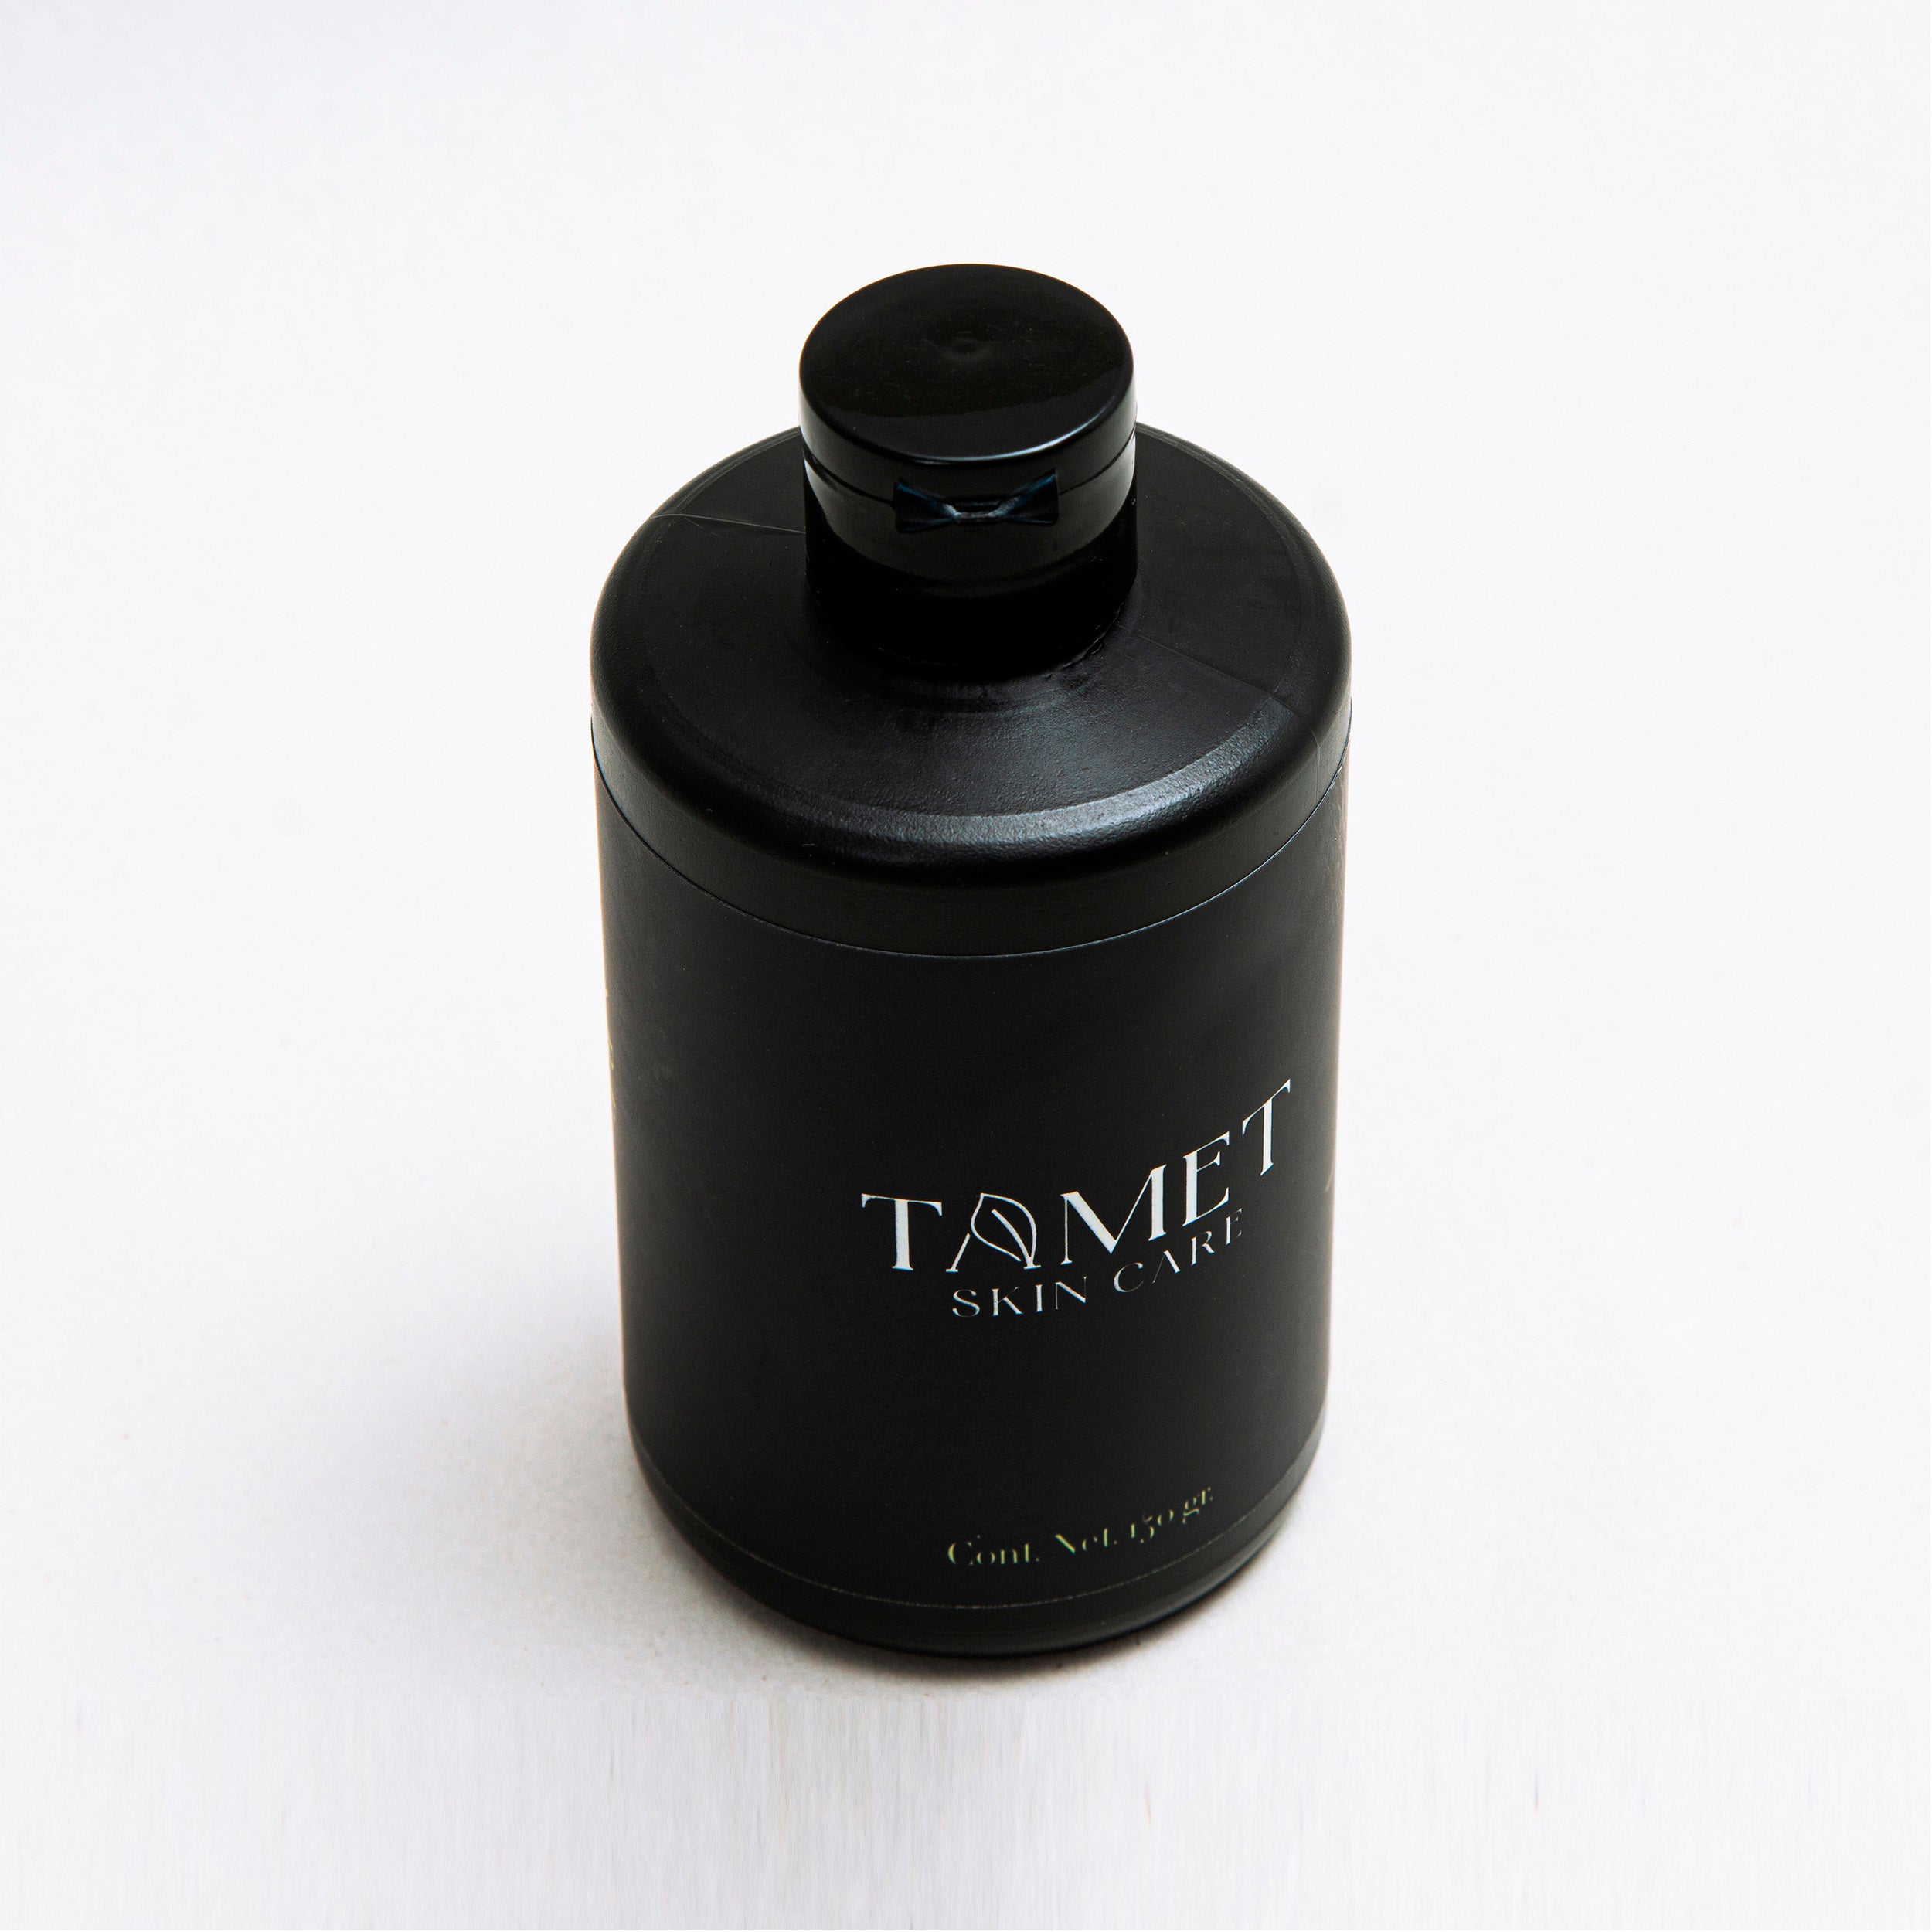 Tamet- Limpiador facial